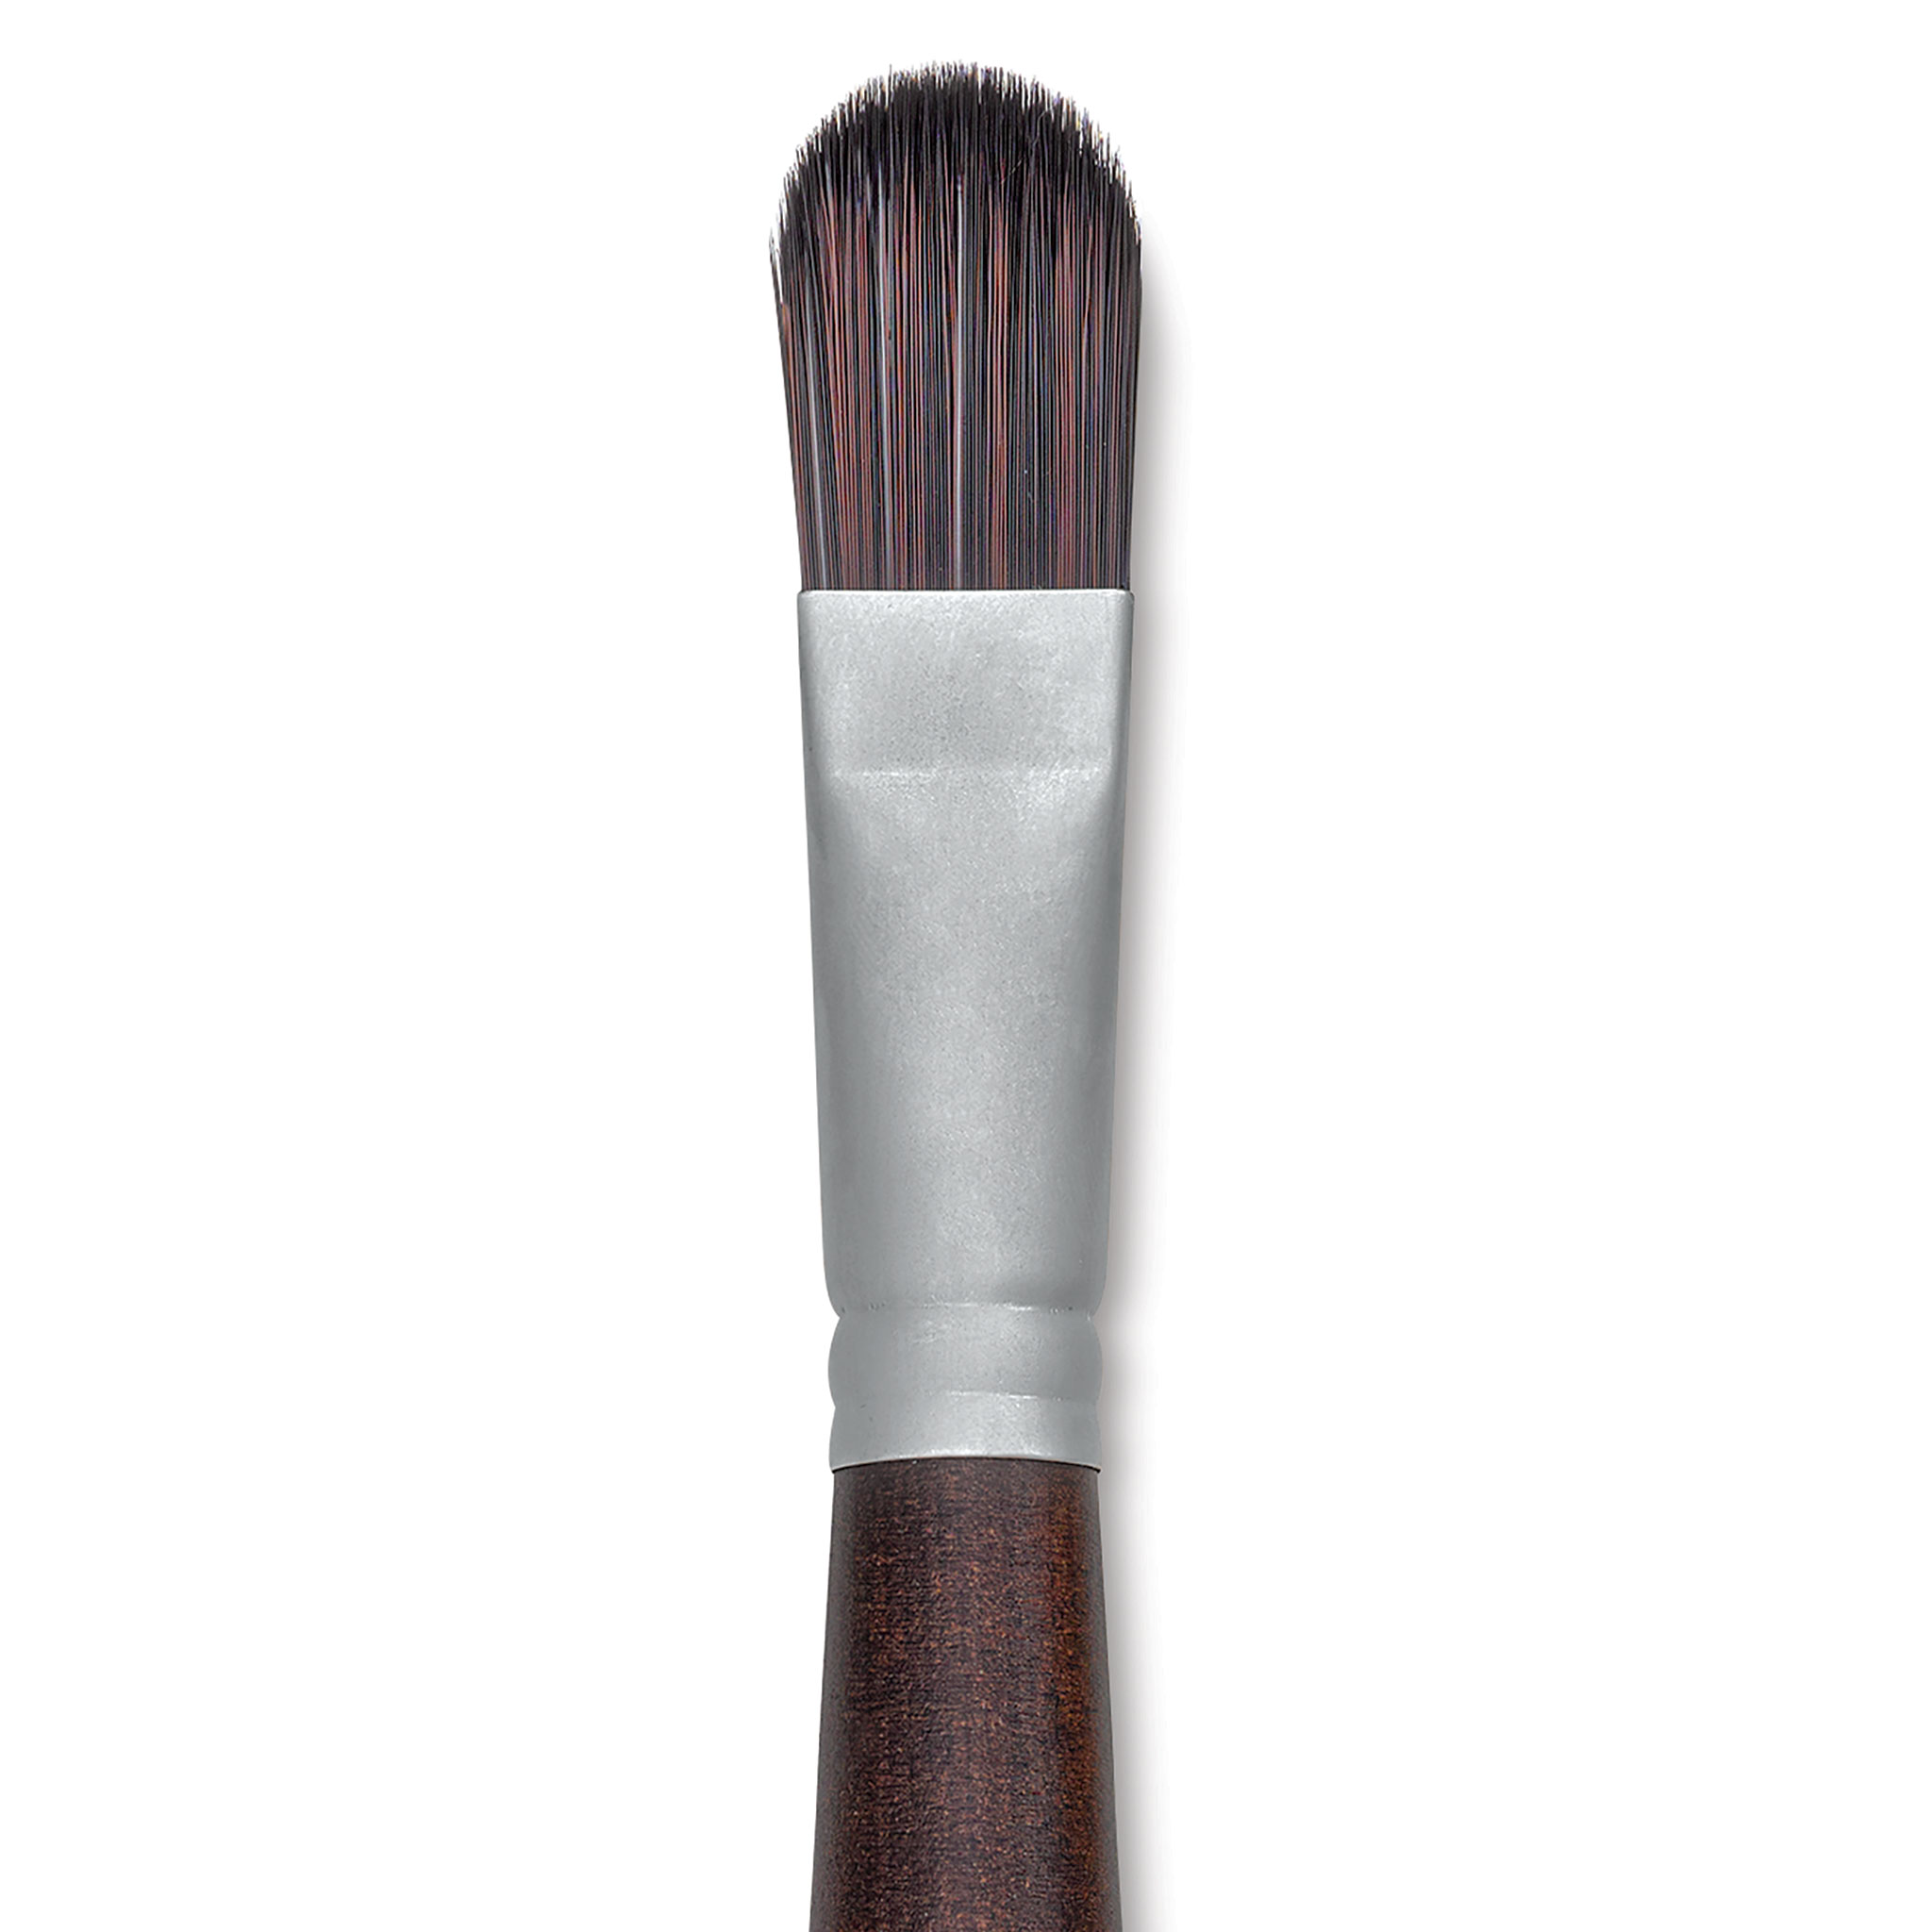 Raphael Textura Acrylic Brushes